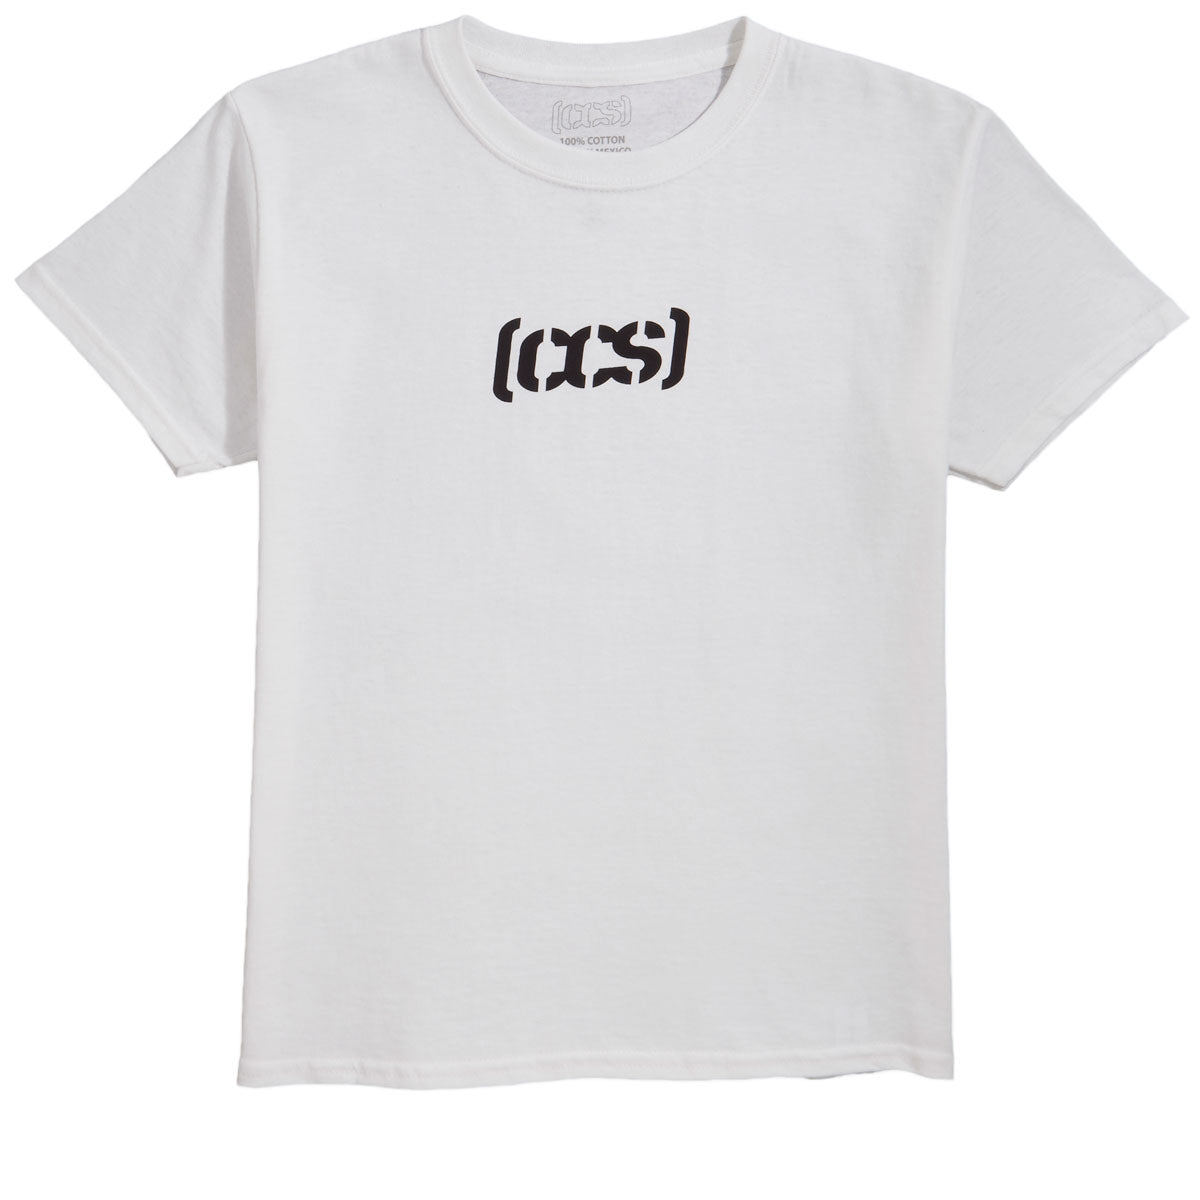 CCS Youth Logo T-Shirt - White/Black image 1